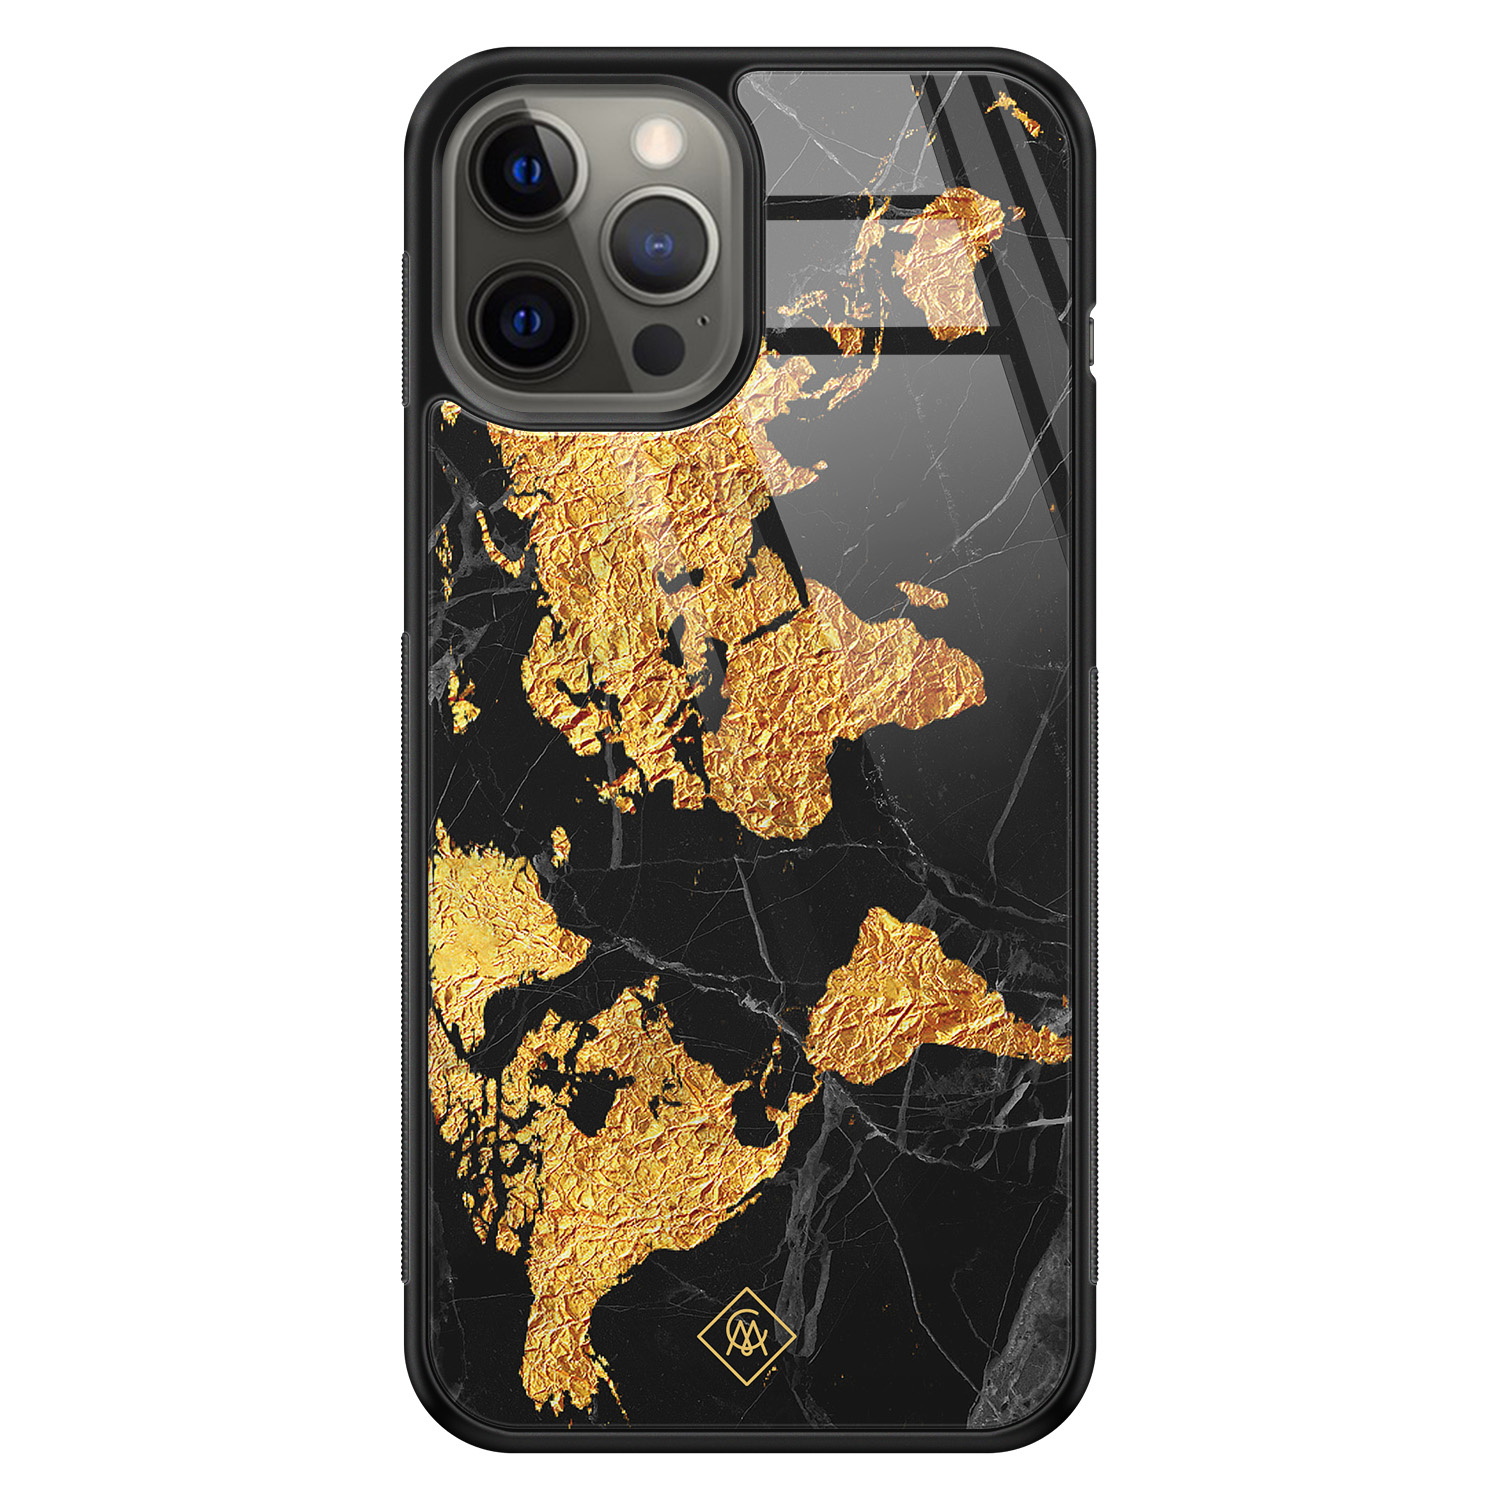 Patois ambitie Dan iPhone 12 Pro Max glazen hardcase - Wereldkaart - Casimoda.nl